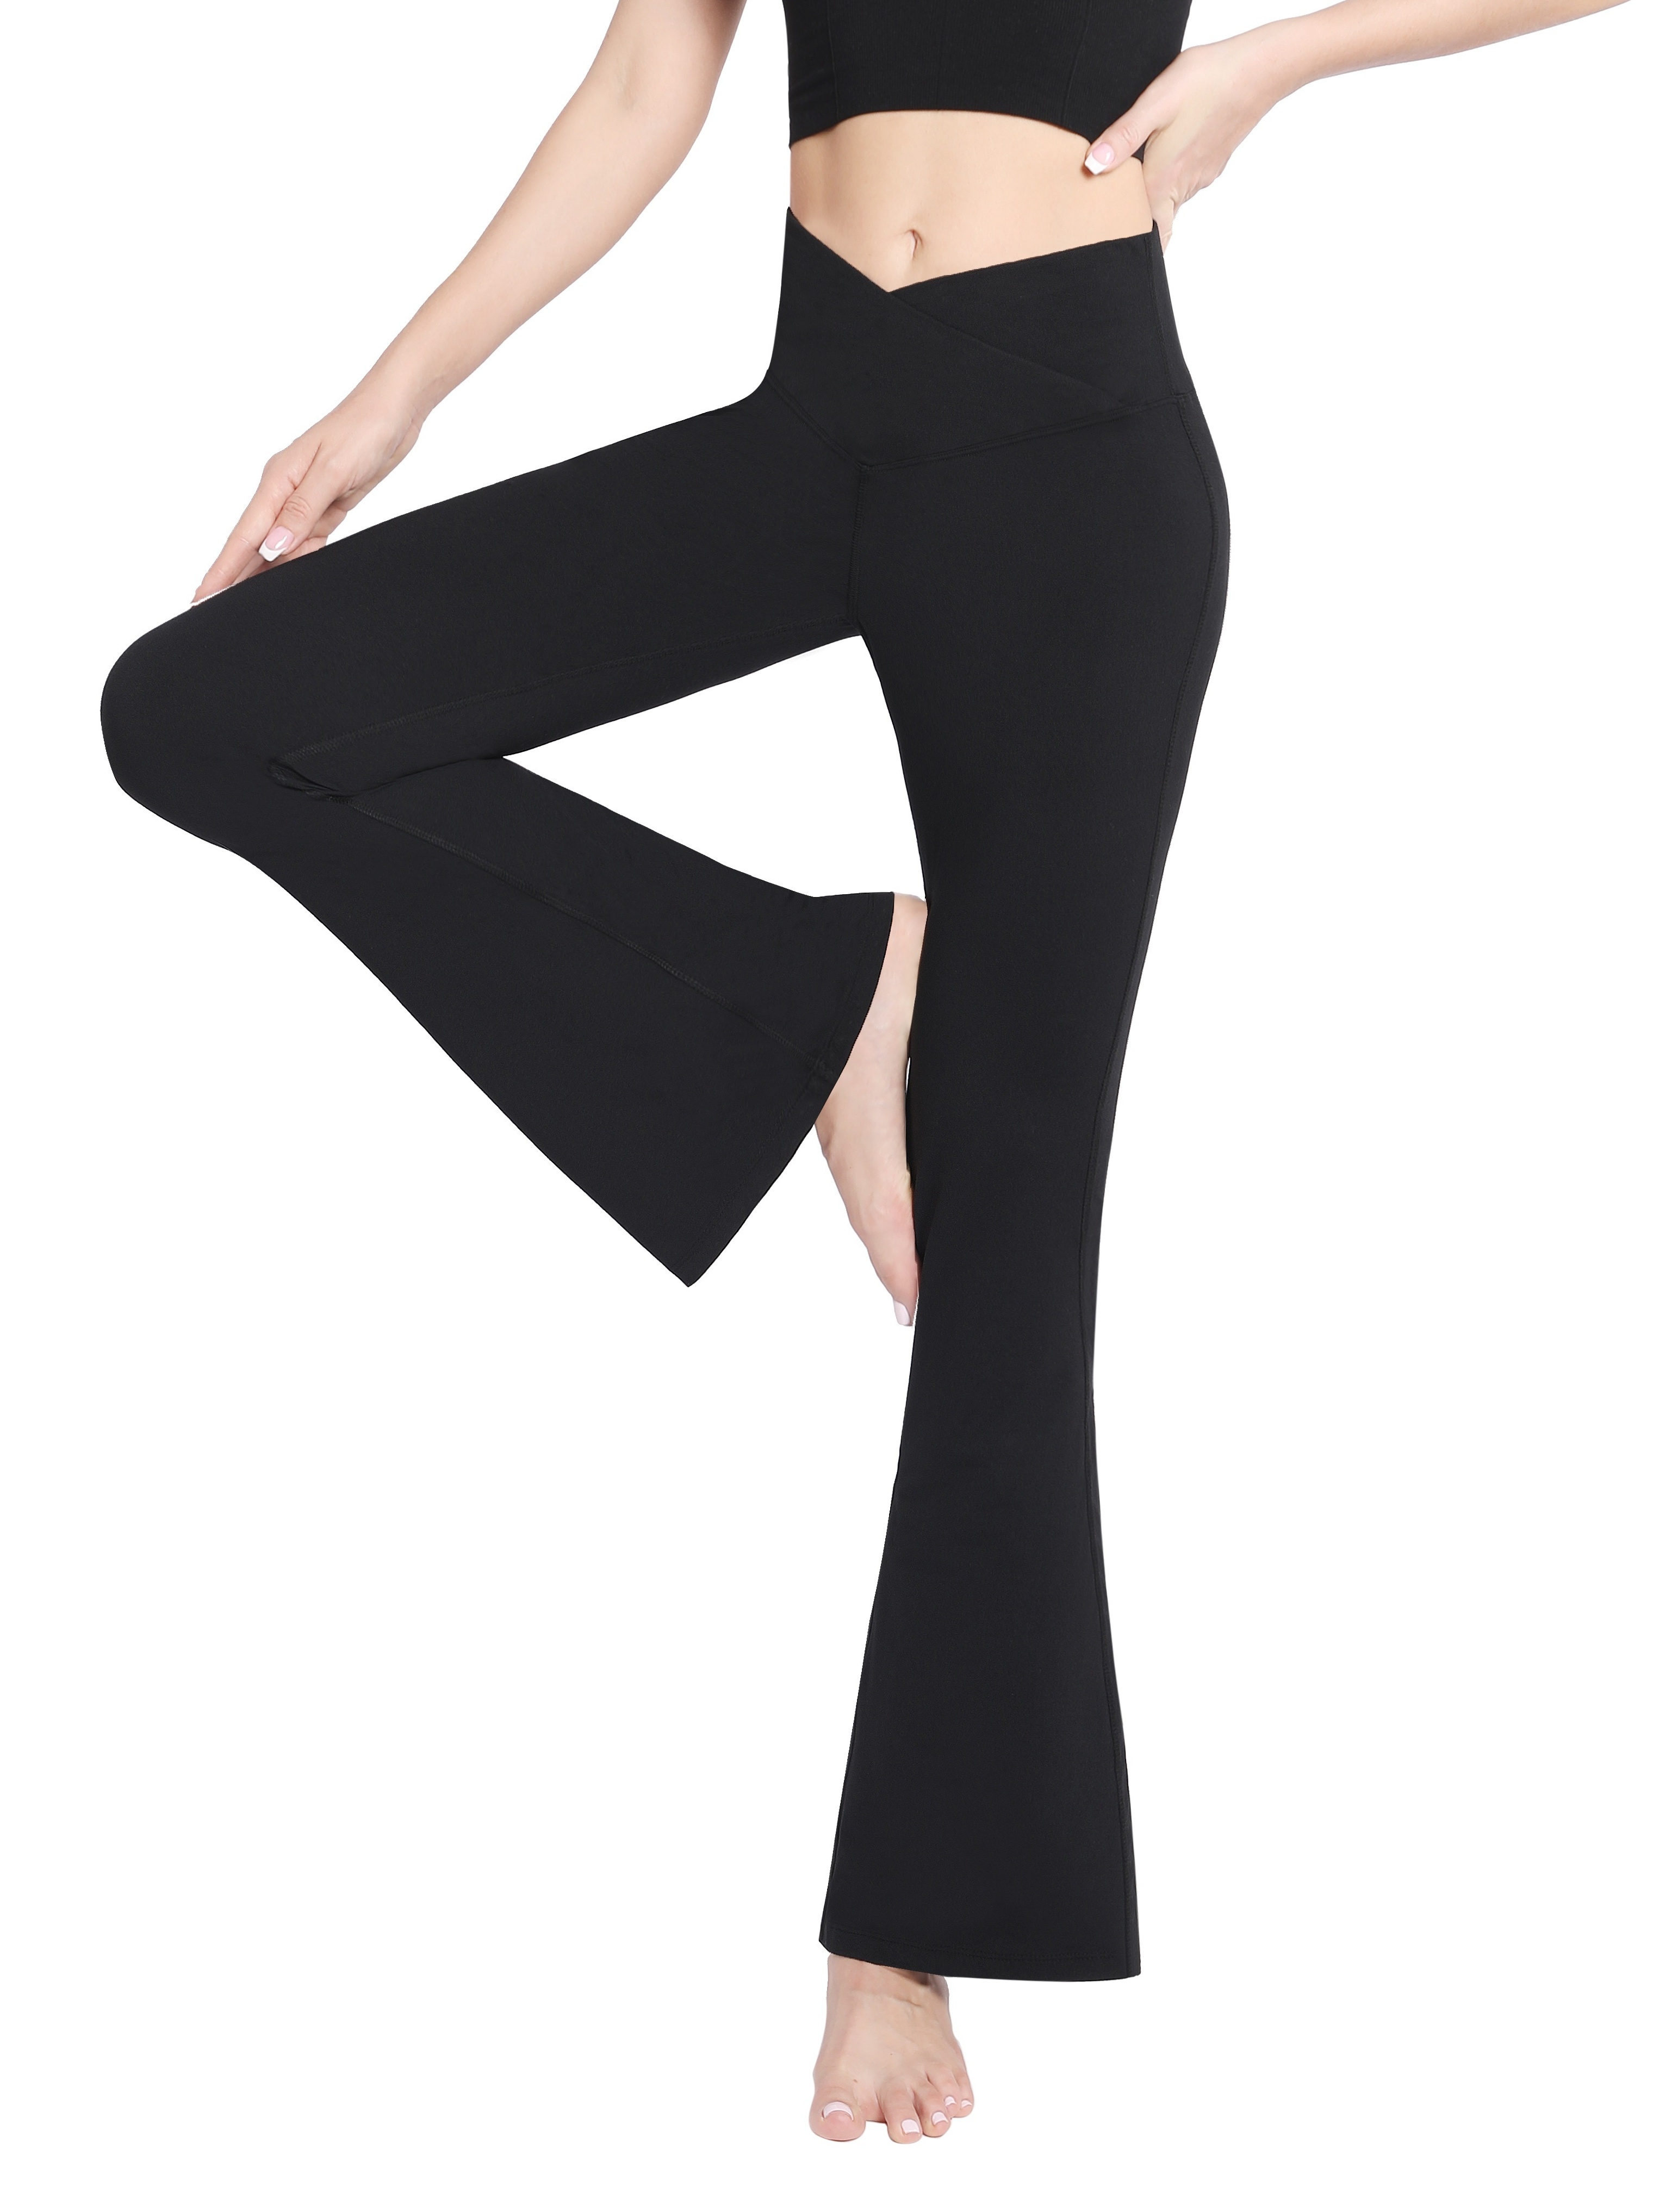 nsendm Unisex Pants Adult Yoga Pants for Women Tall with Pocket Sports Yoga  Shorts Pocket Fashion Women's Pants Fold over Yoga Pants for(Black, M)